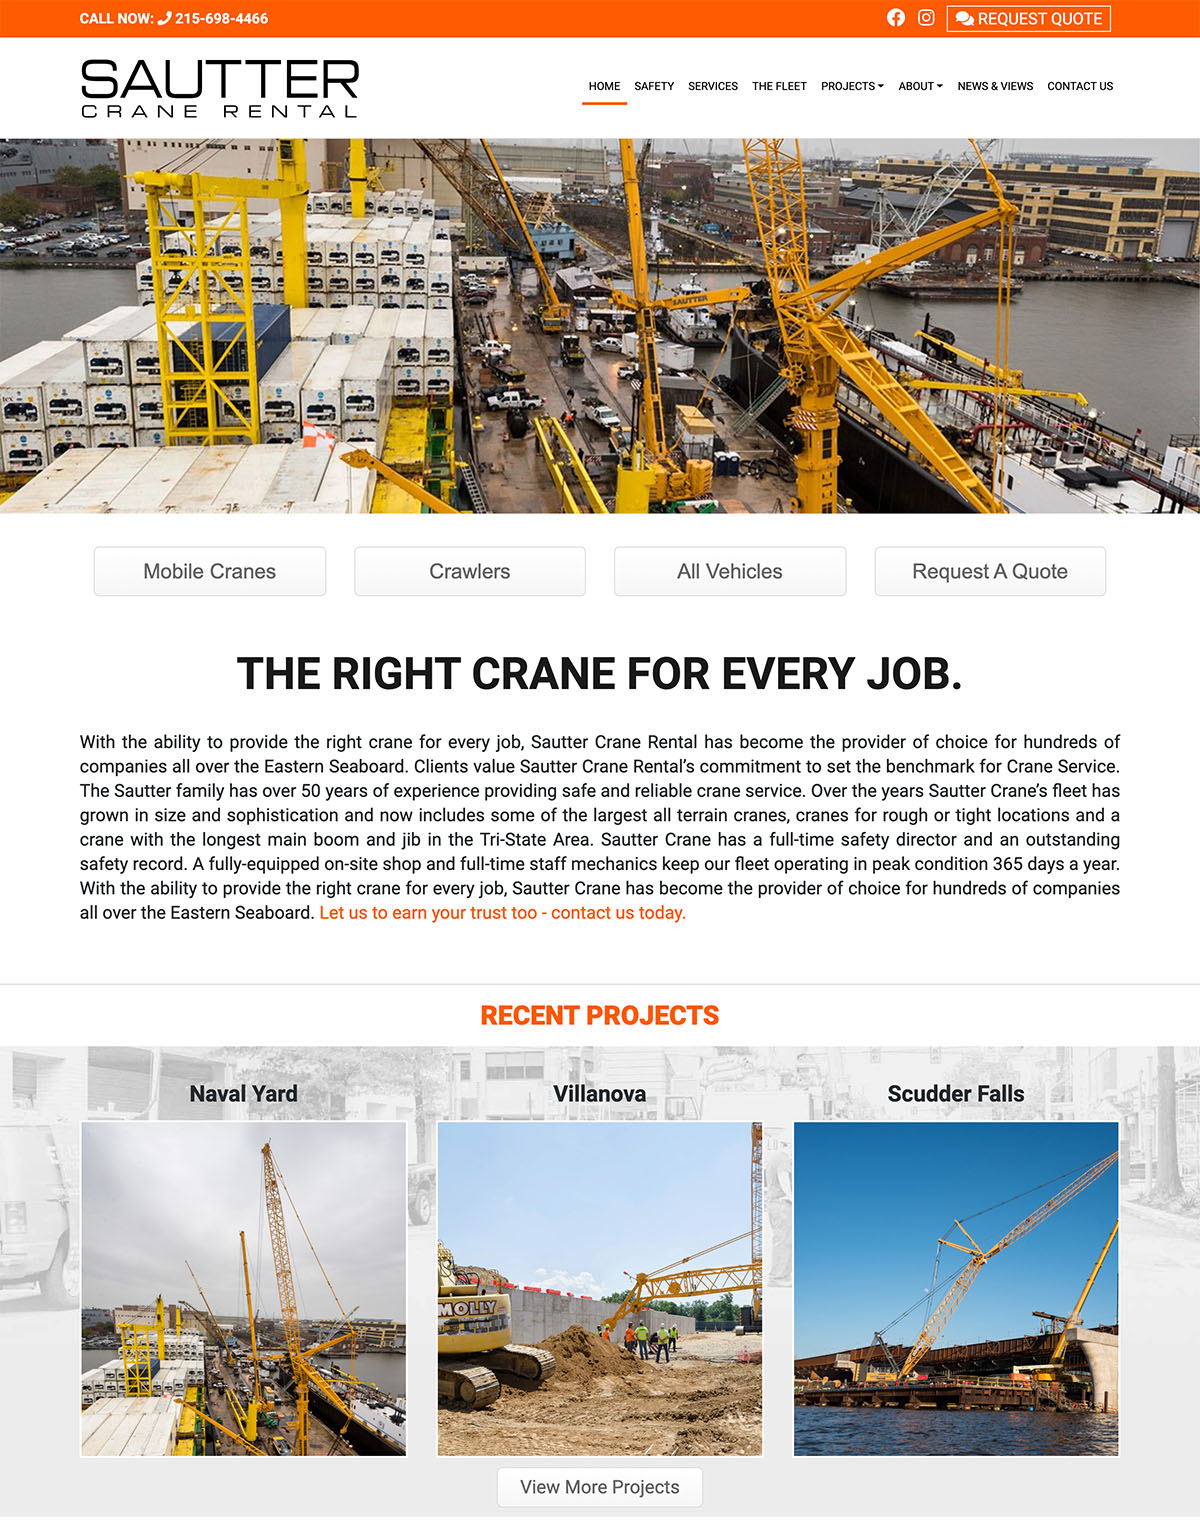 Sautter Crane Rental Website - Northlight Marketing & Promotion